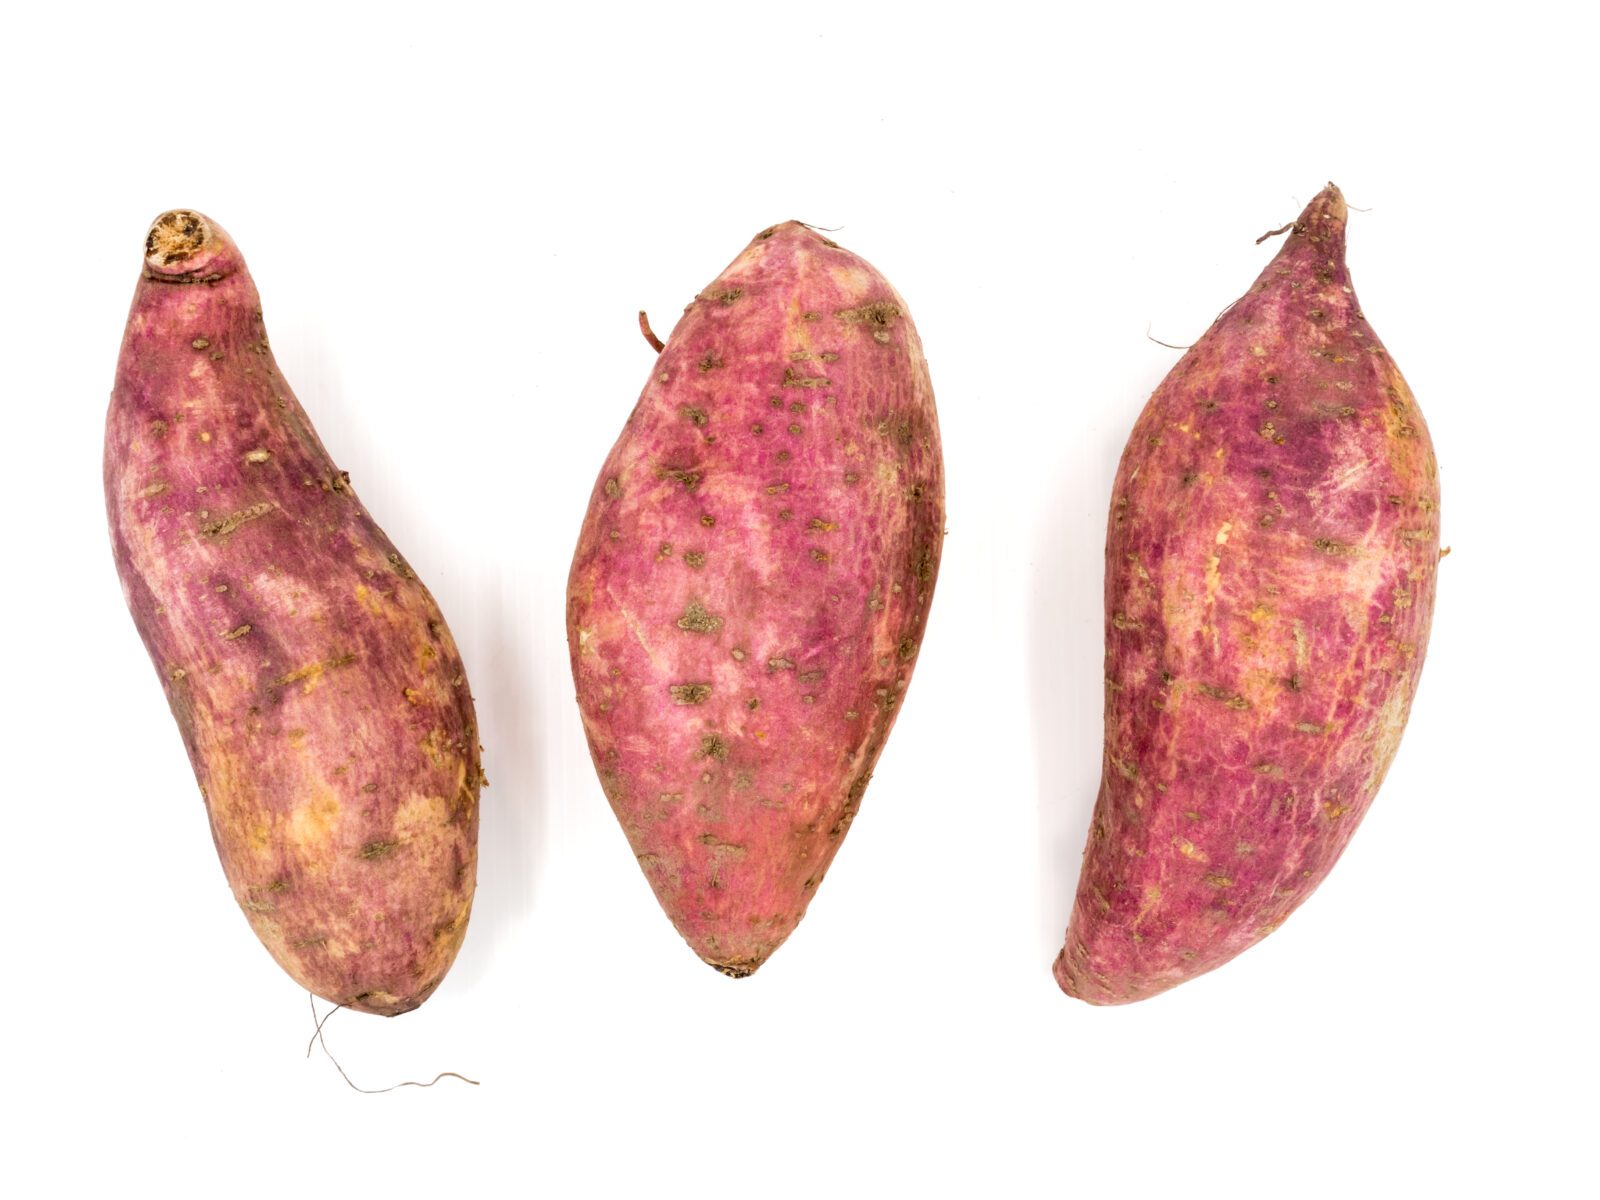 The Best Purple Sweet Potato Recipes - Jango Recipes